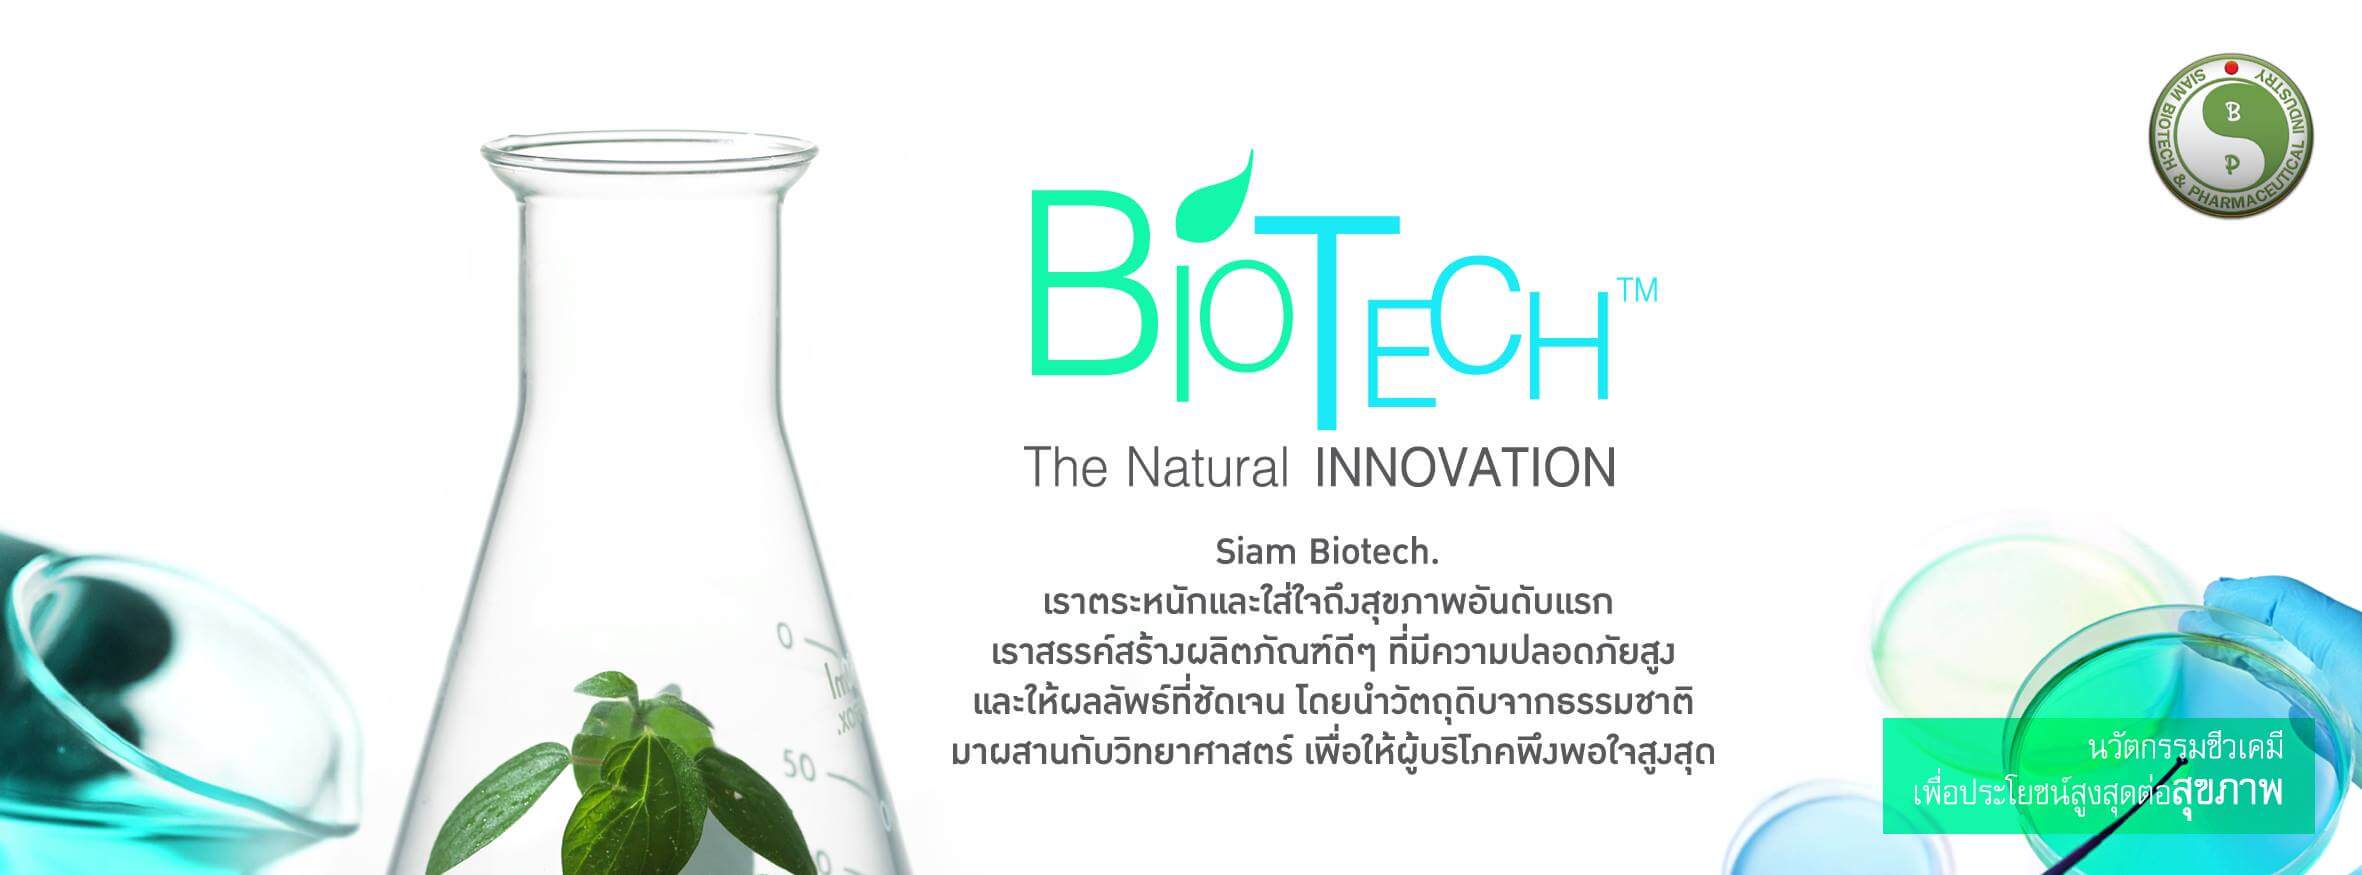 Siambiotech โรงงานรับผลิตเครื่องดื่ม ผลิตและบรรจุสินค้าประเภทต่างๆ